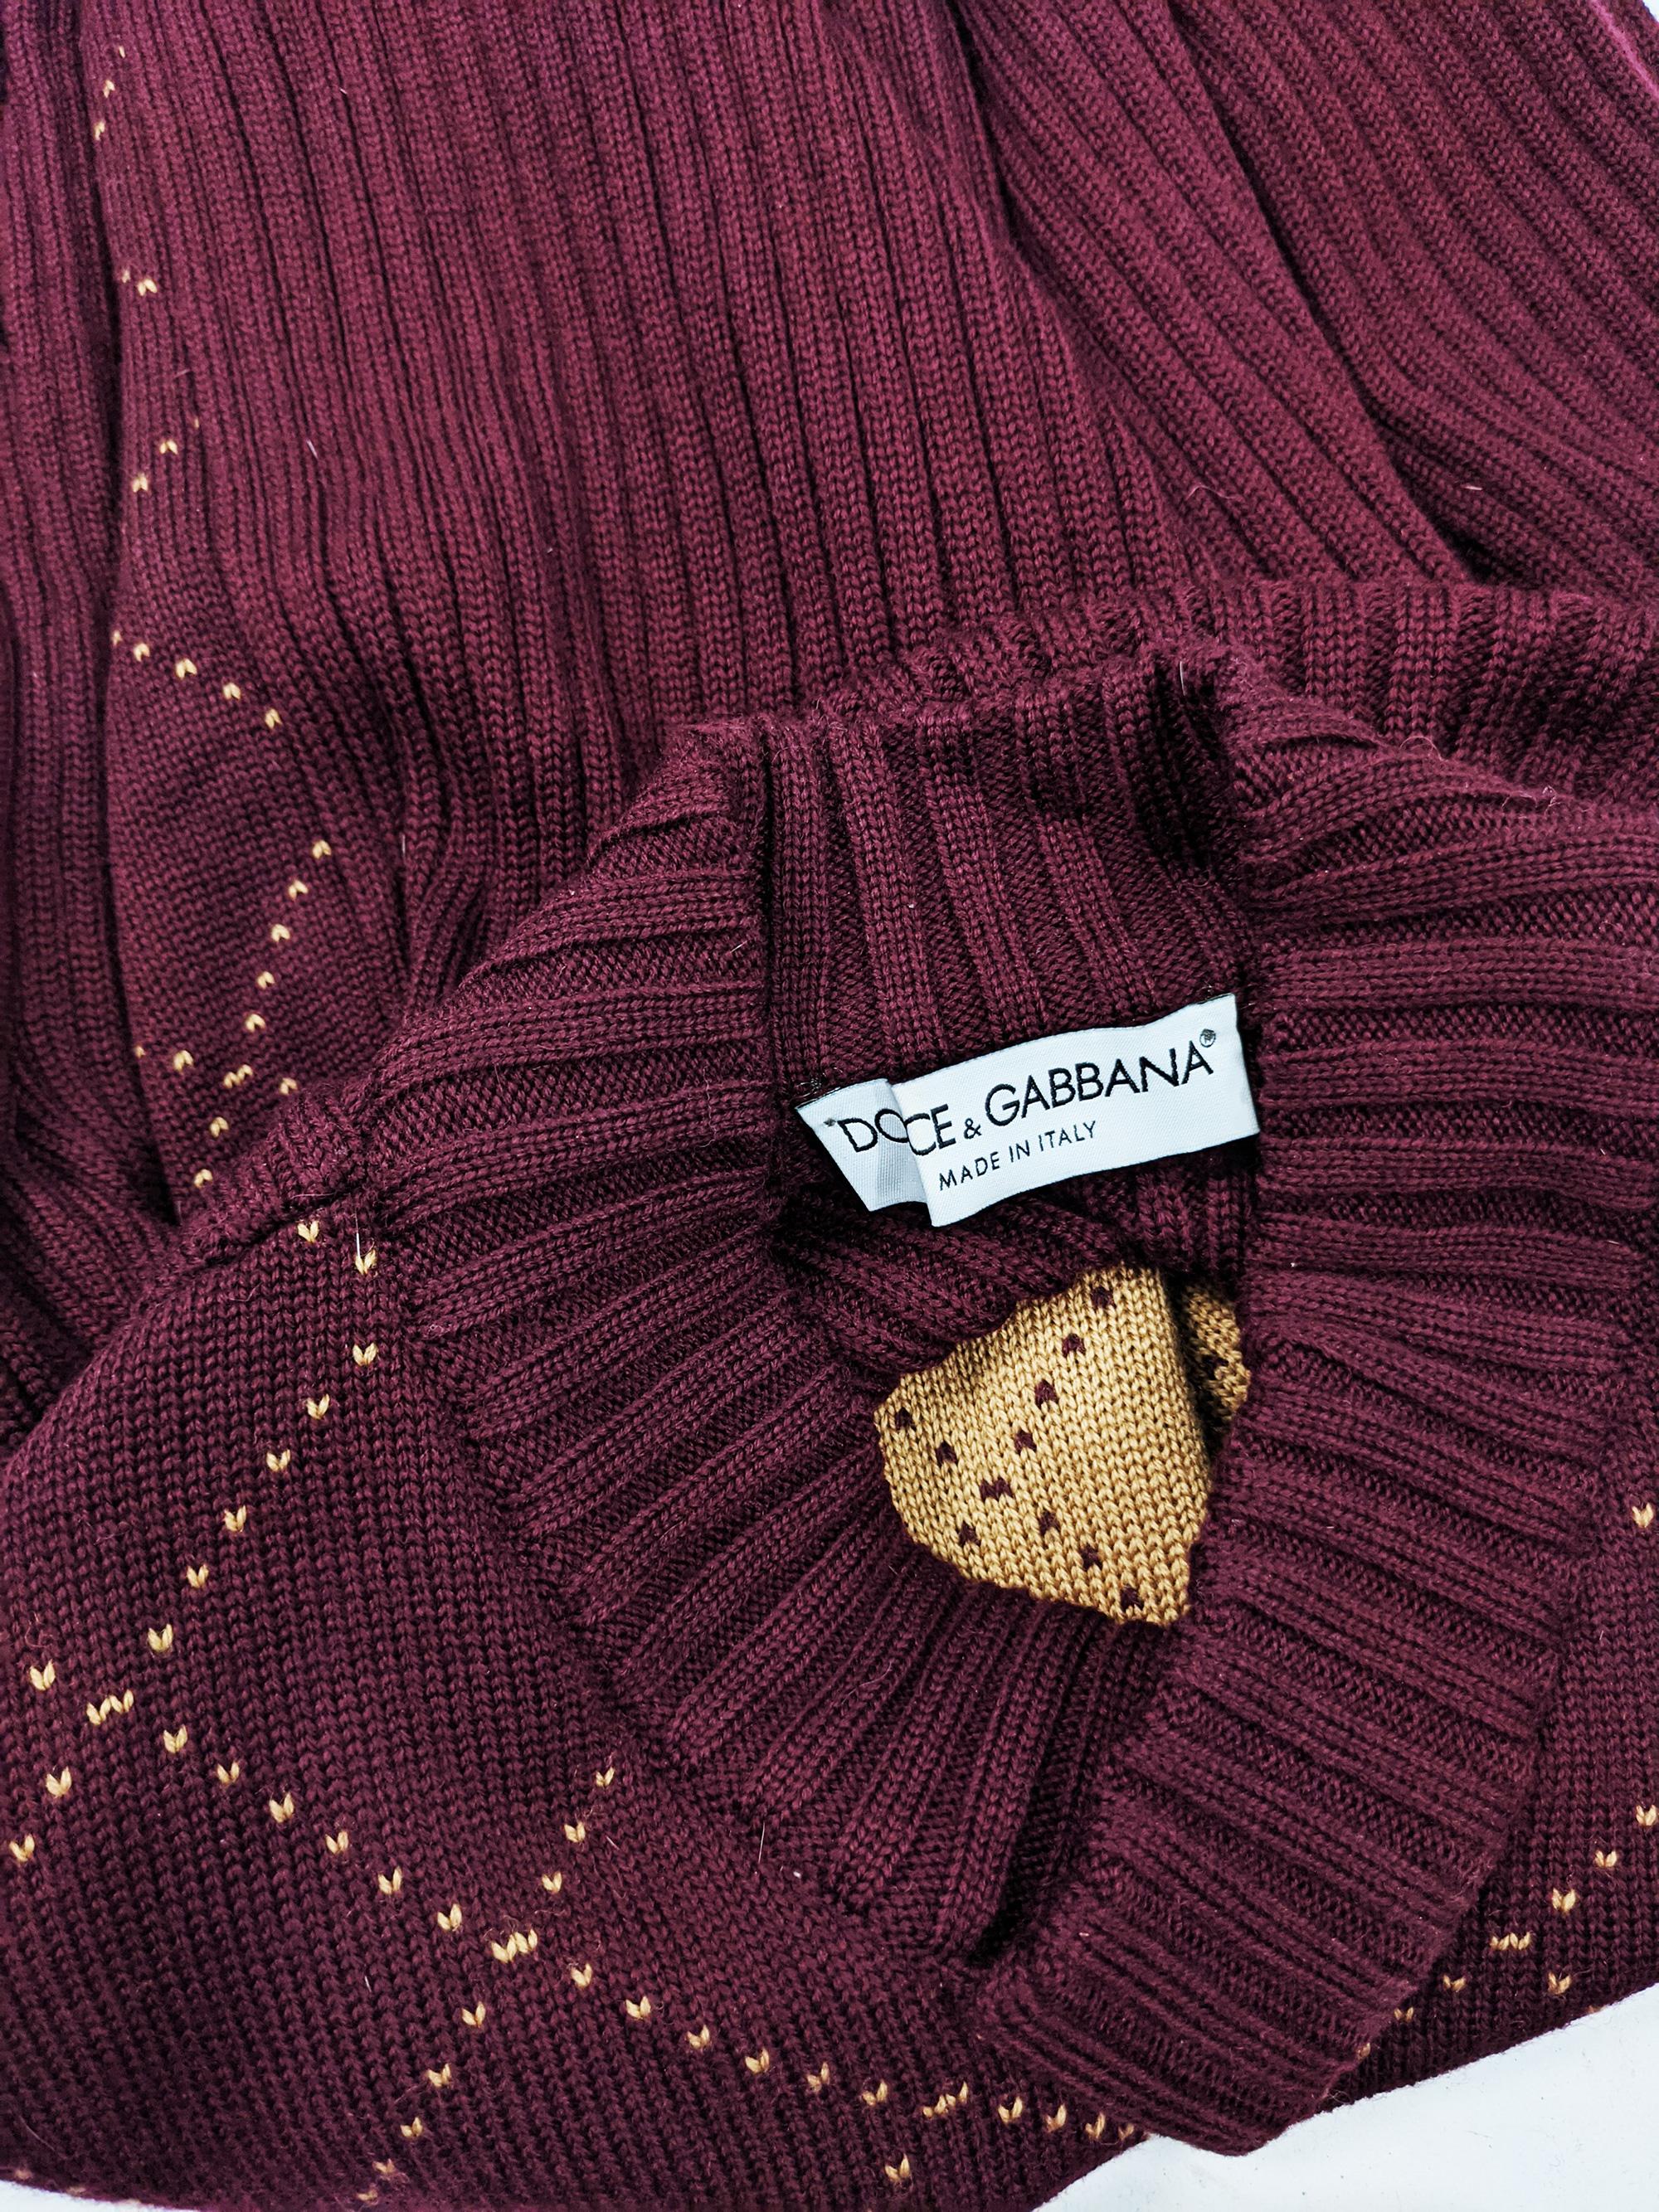 Dolce & Gabbana Vintage Mens Wine Red Sweater, 1990s 1